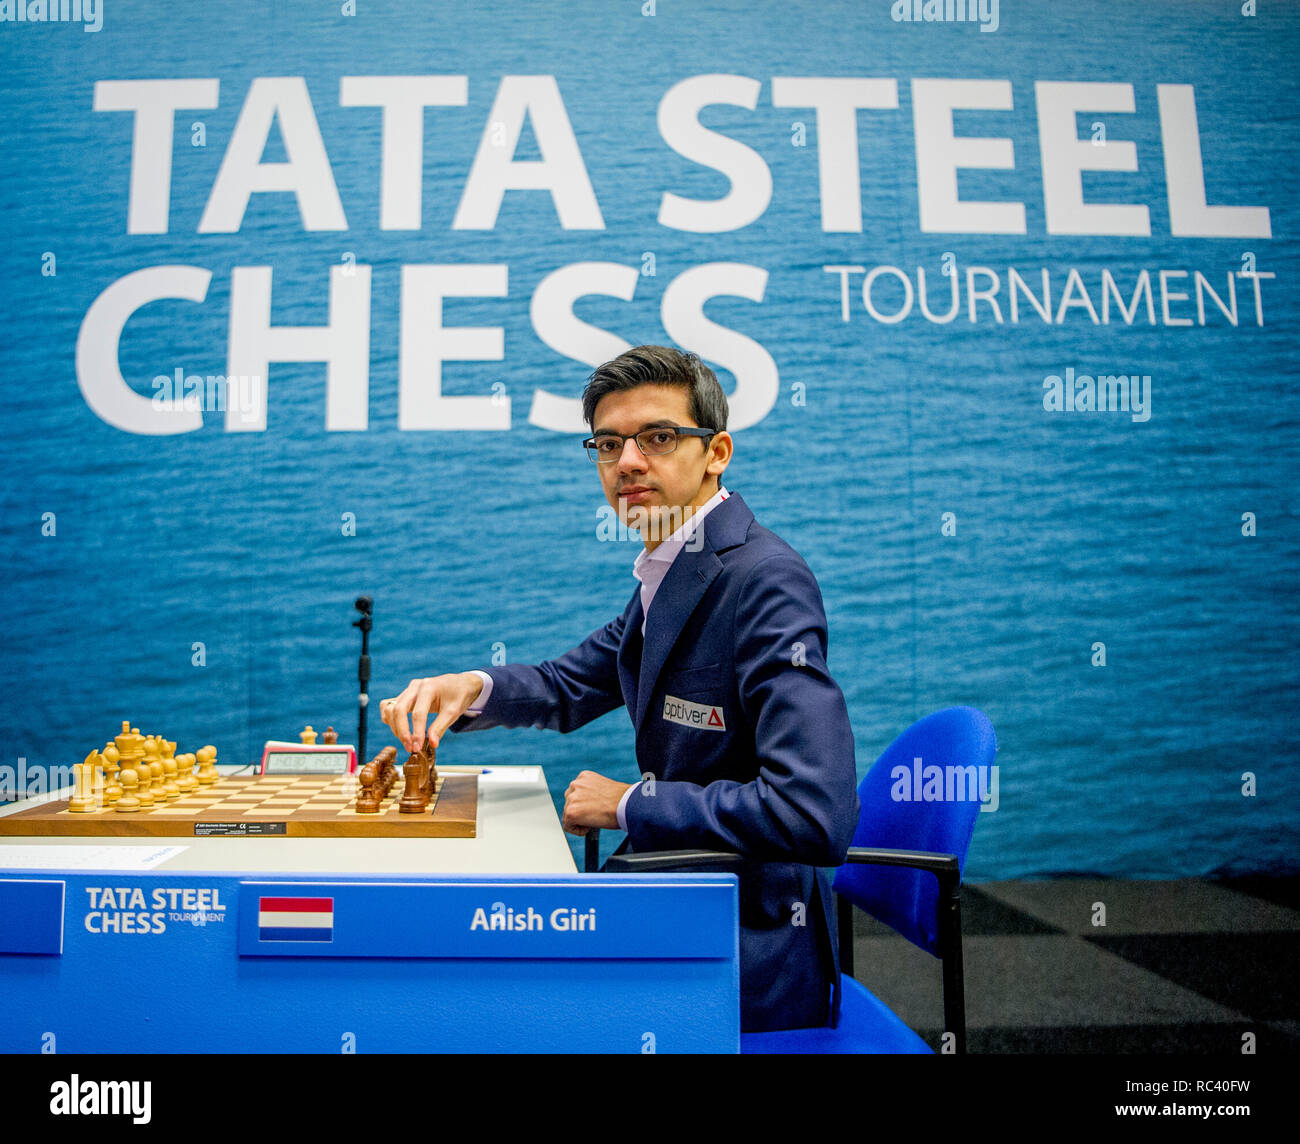 Optiver ambassador Anish Giri wins Tata Steel Chess Masters 2023